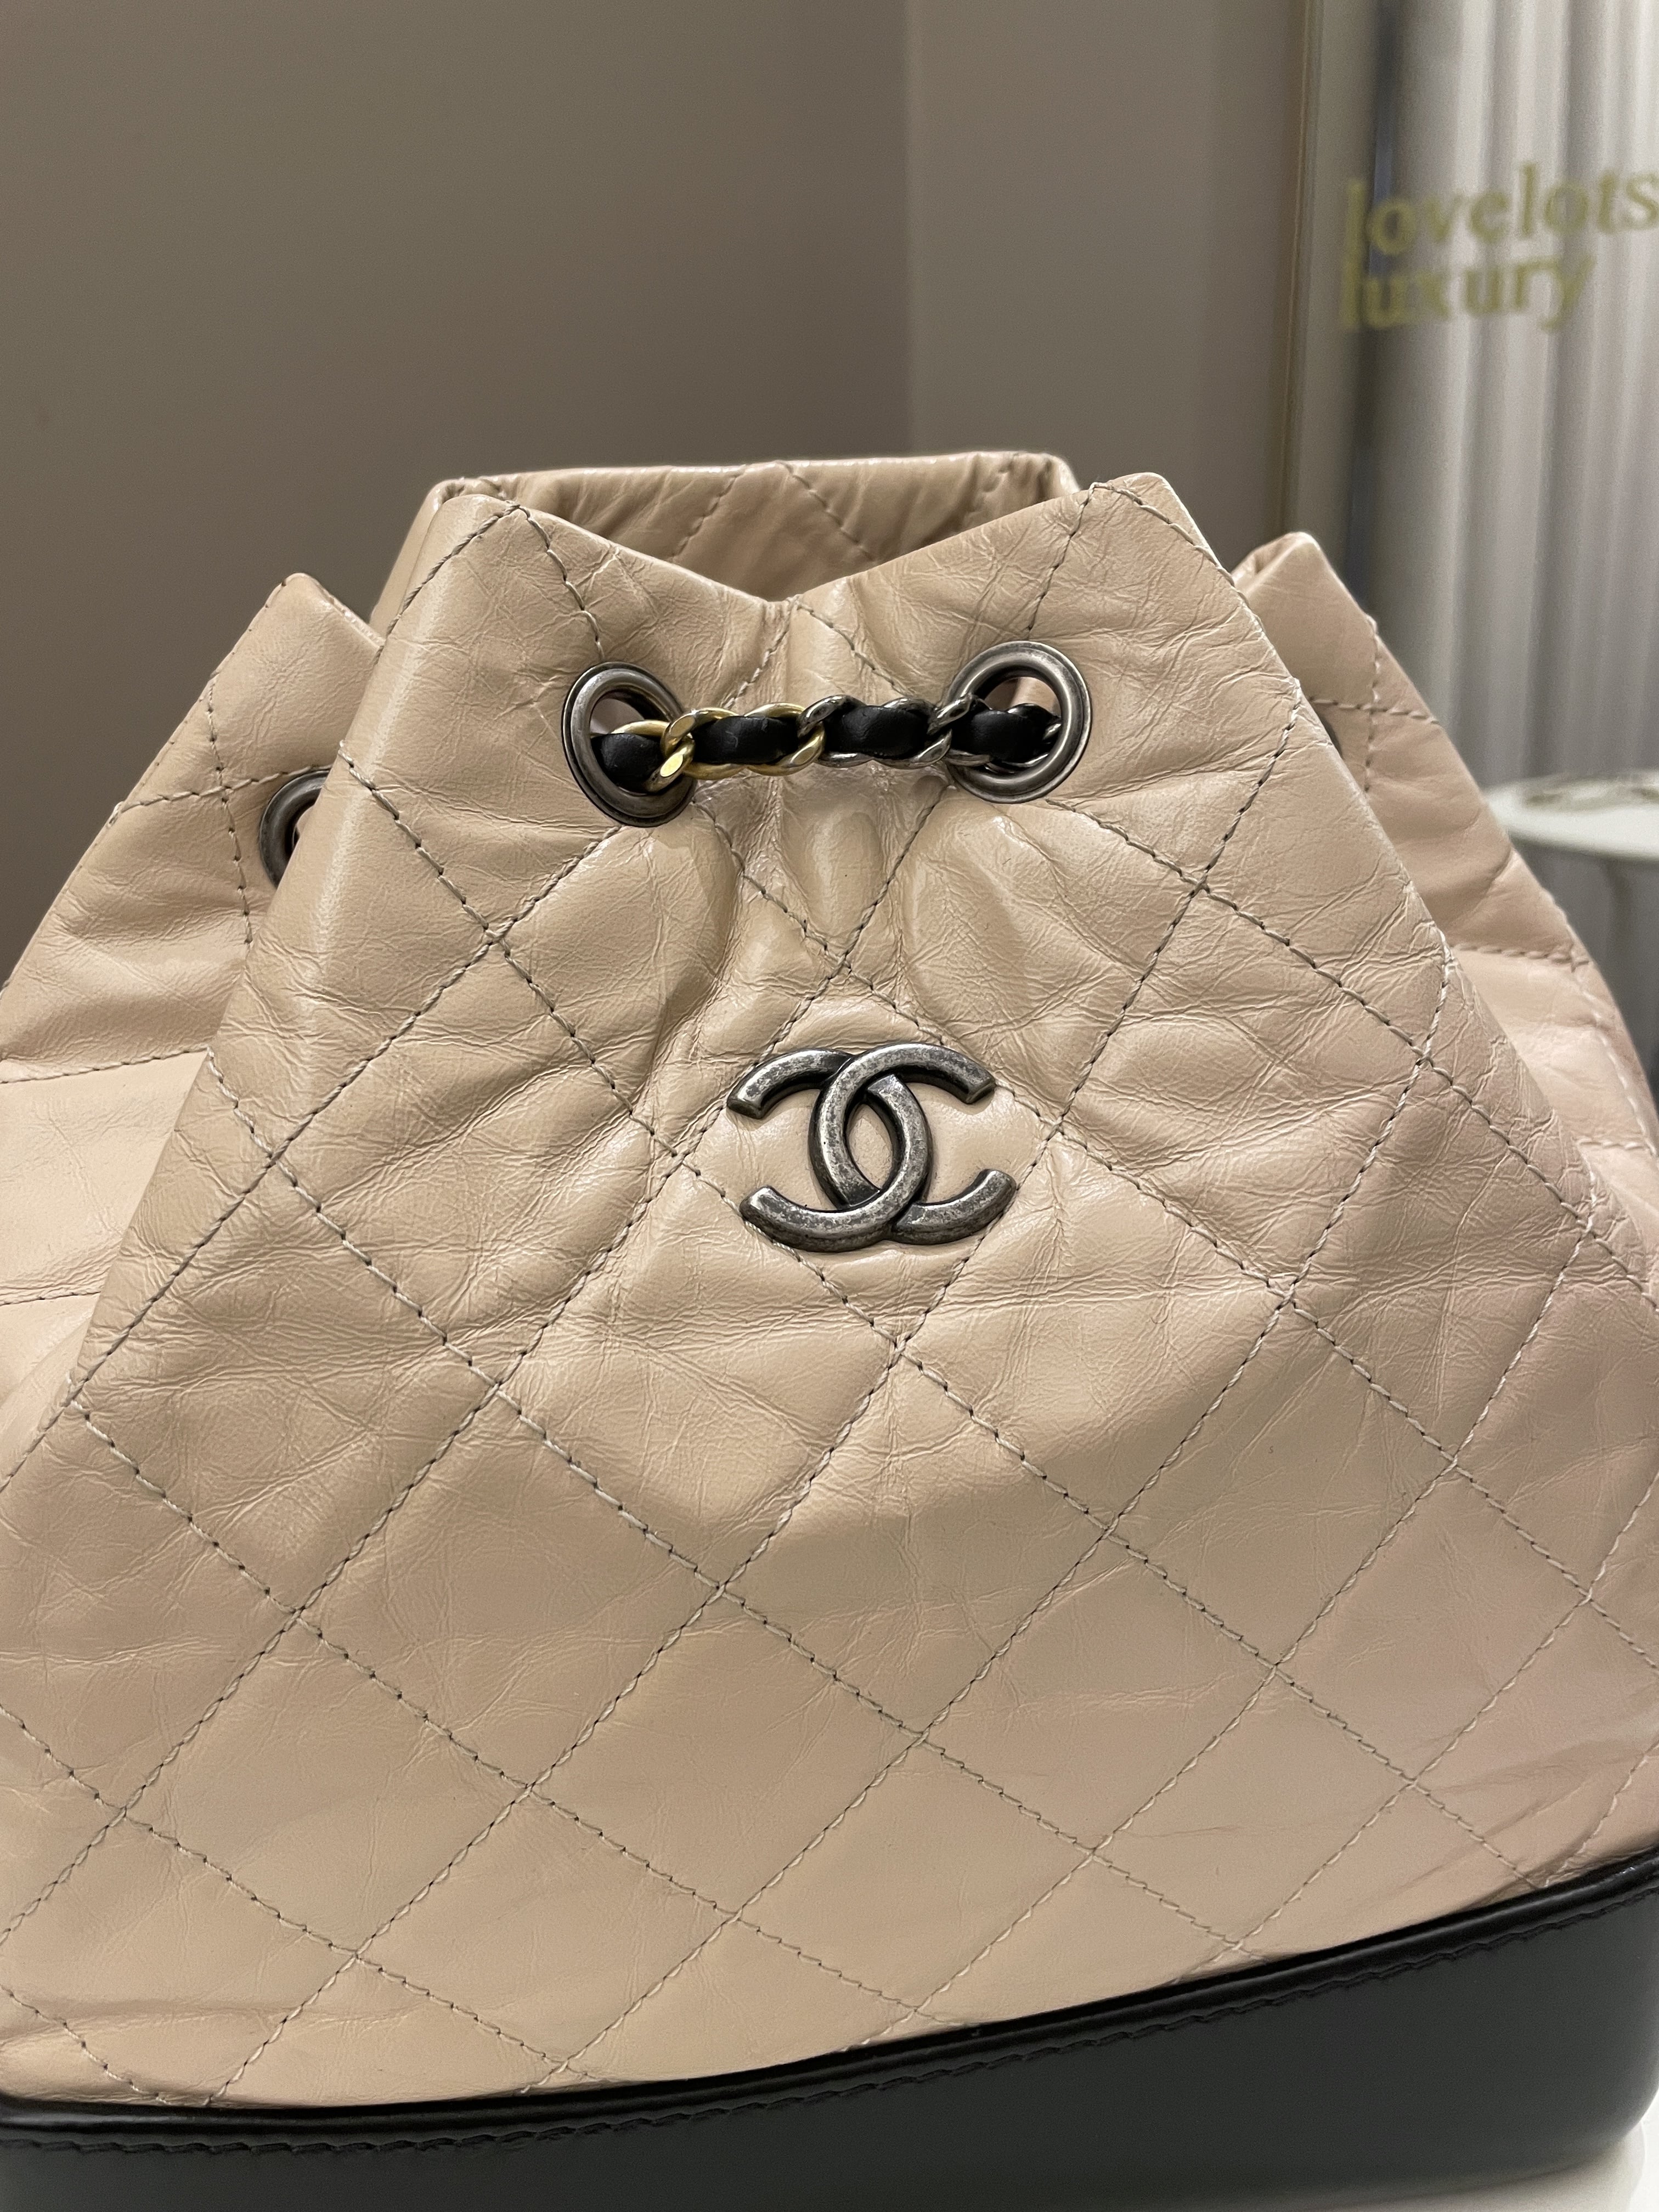 Chanel-Vuitton, Sale n°2140, Lot n°158